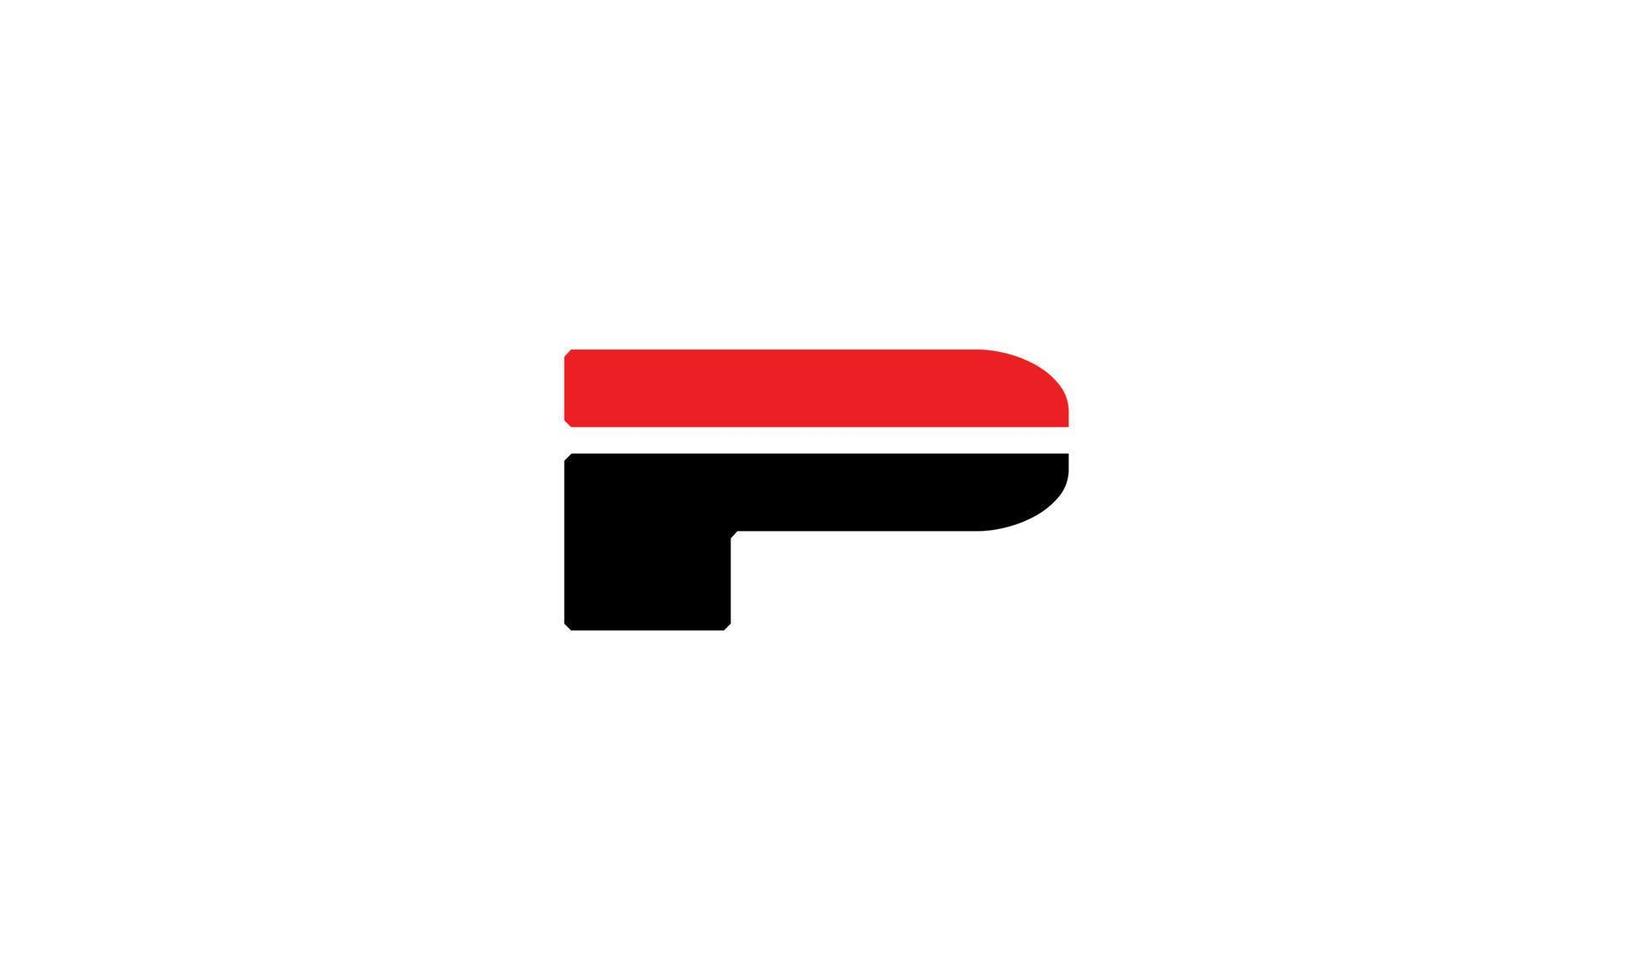 Letter P logo design free vector template.